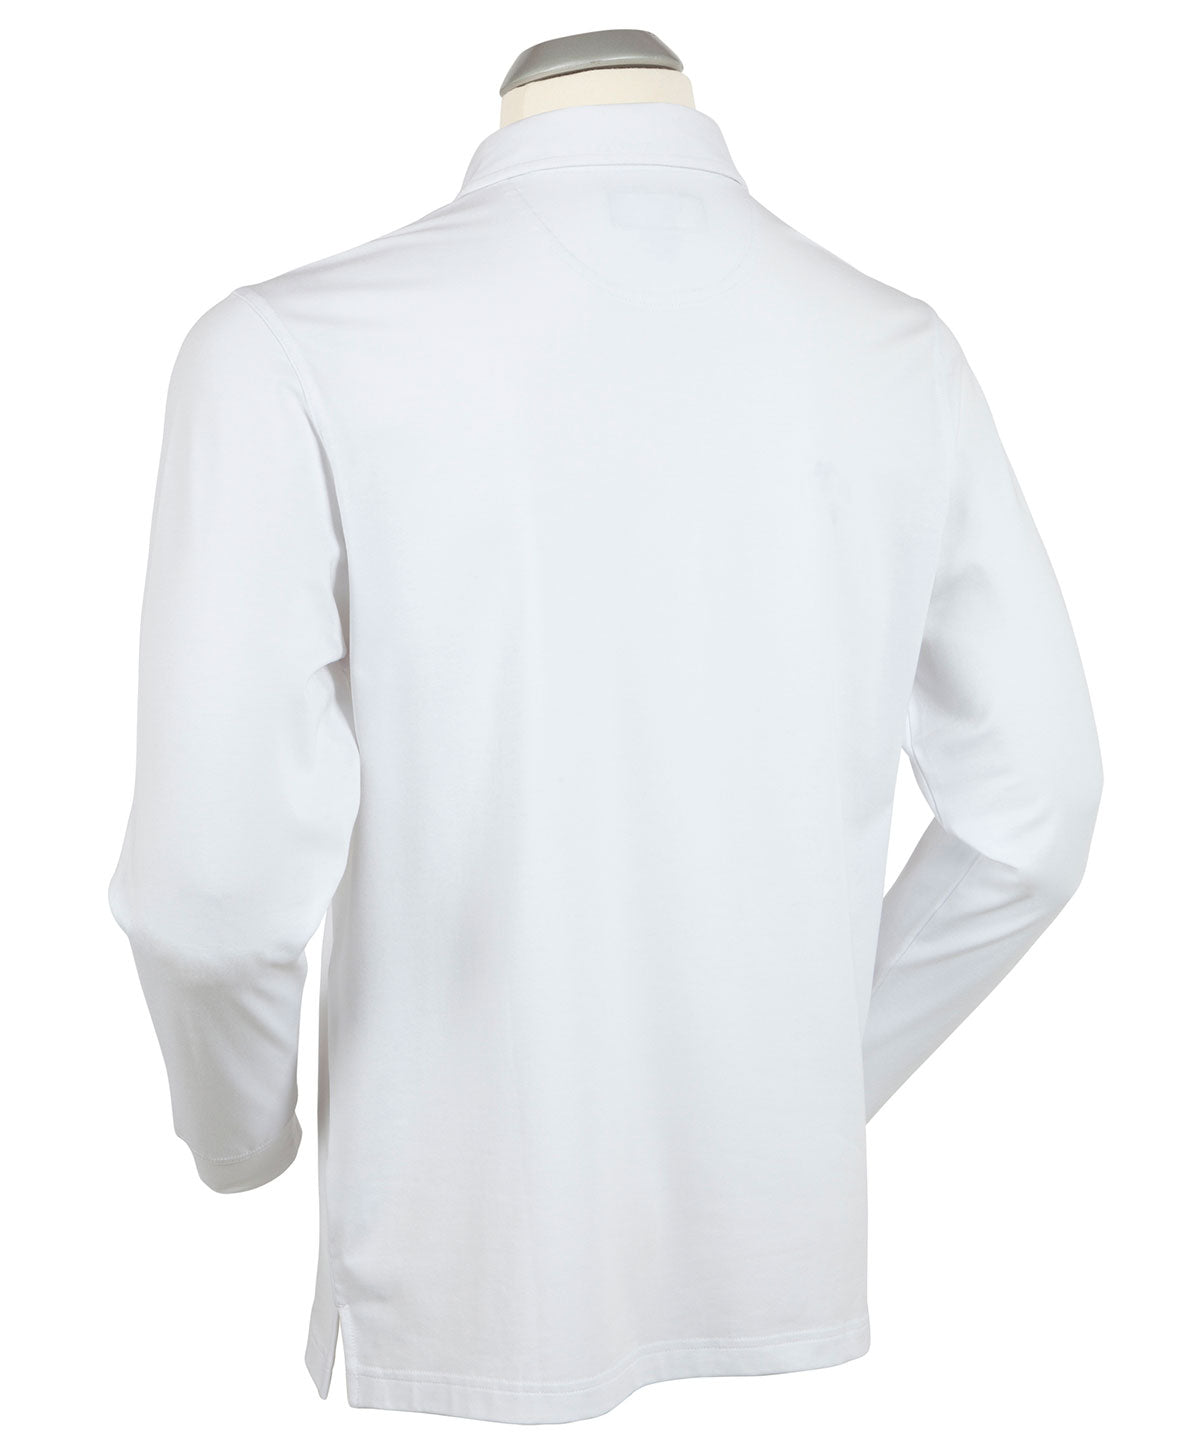 Signature Liquid Cotton Spread Collar Long-Sleeve Polo